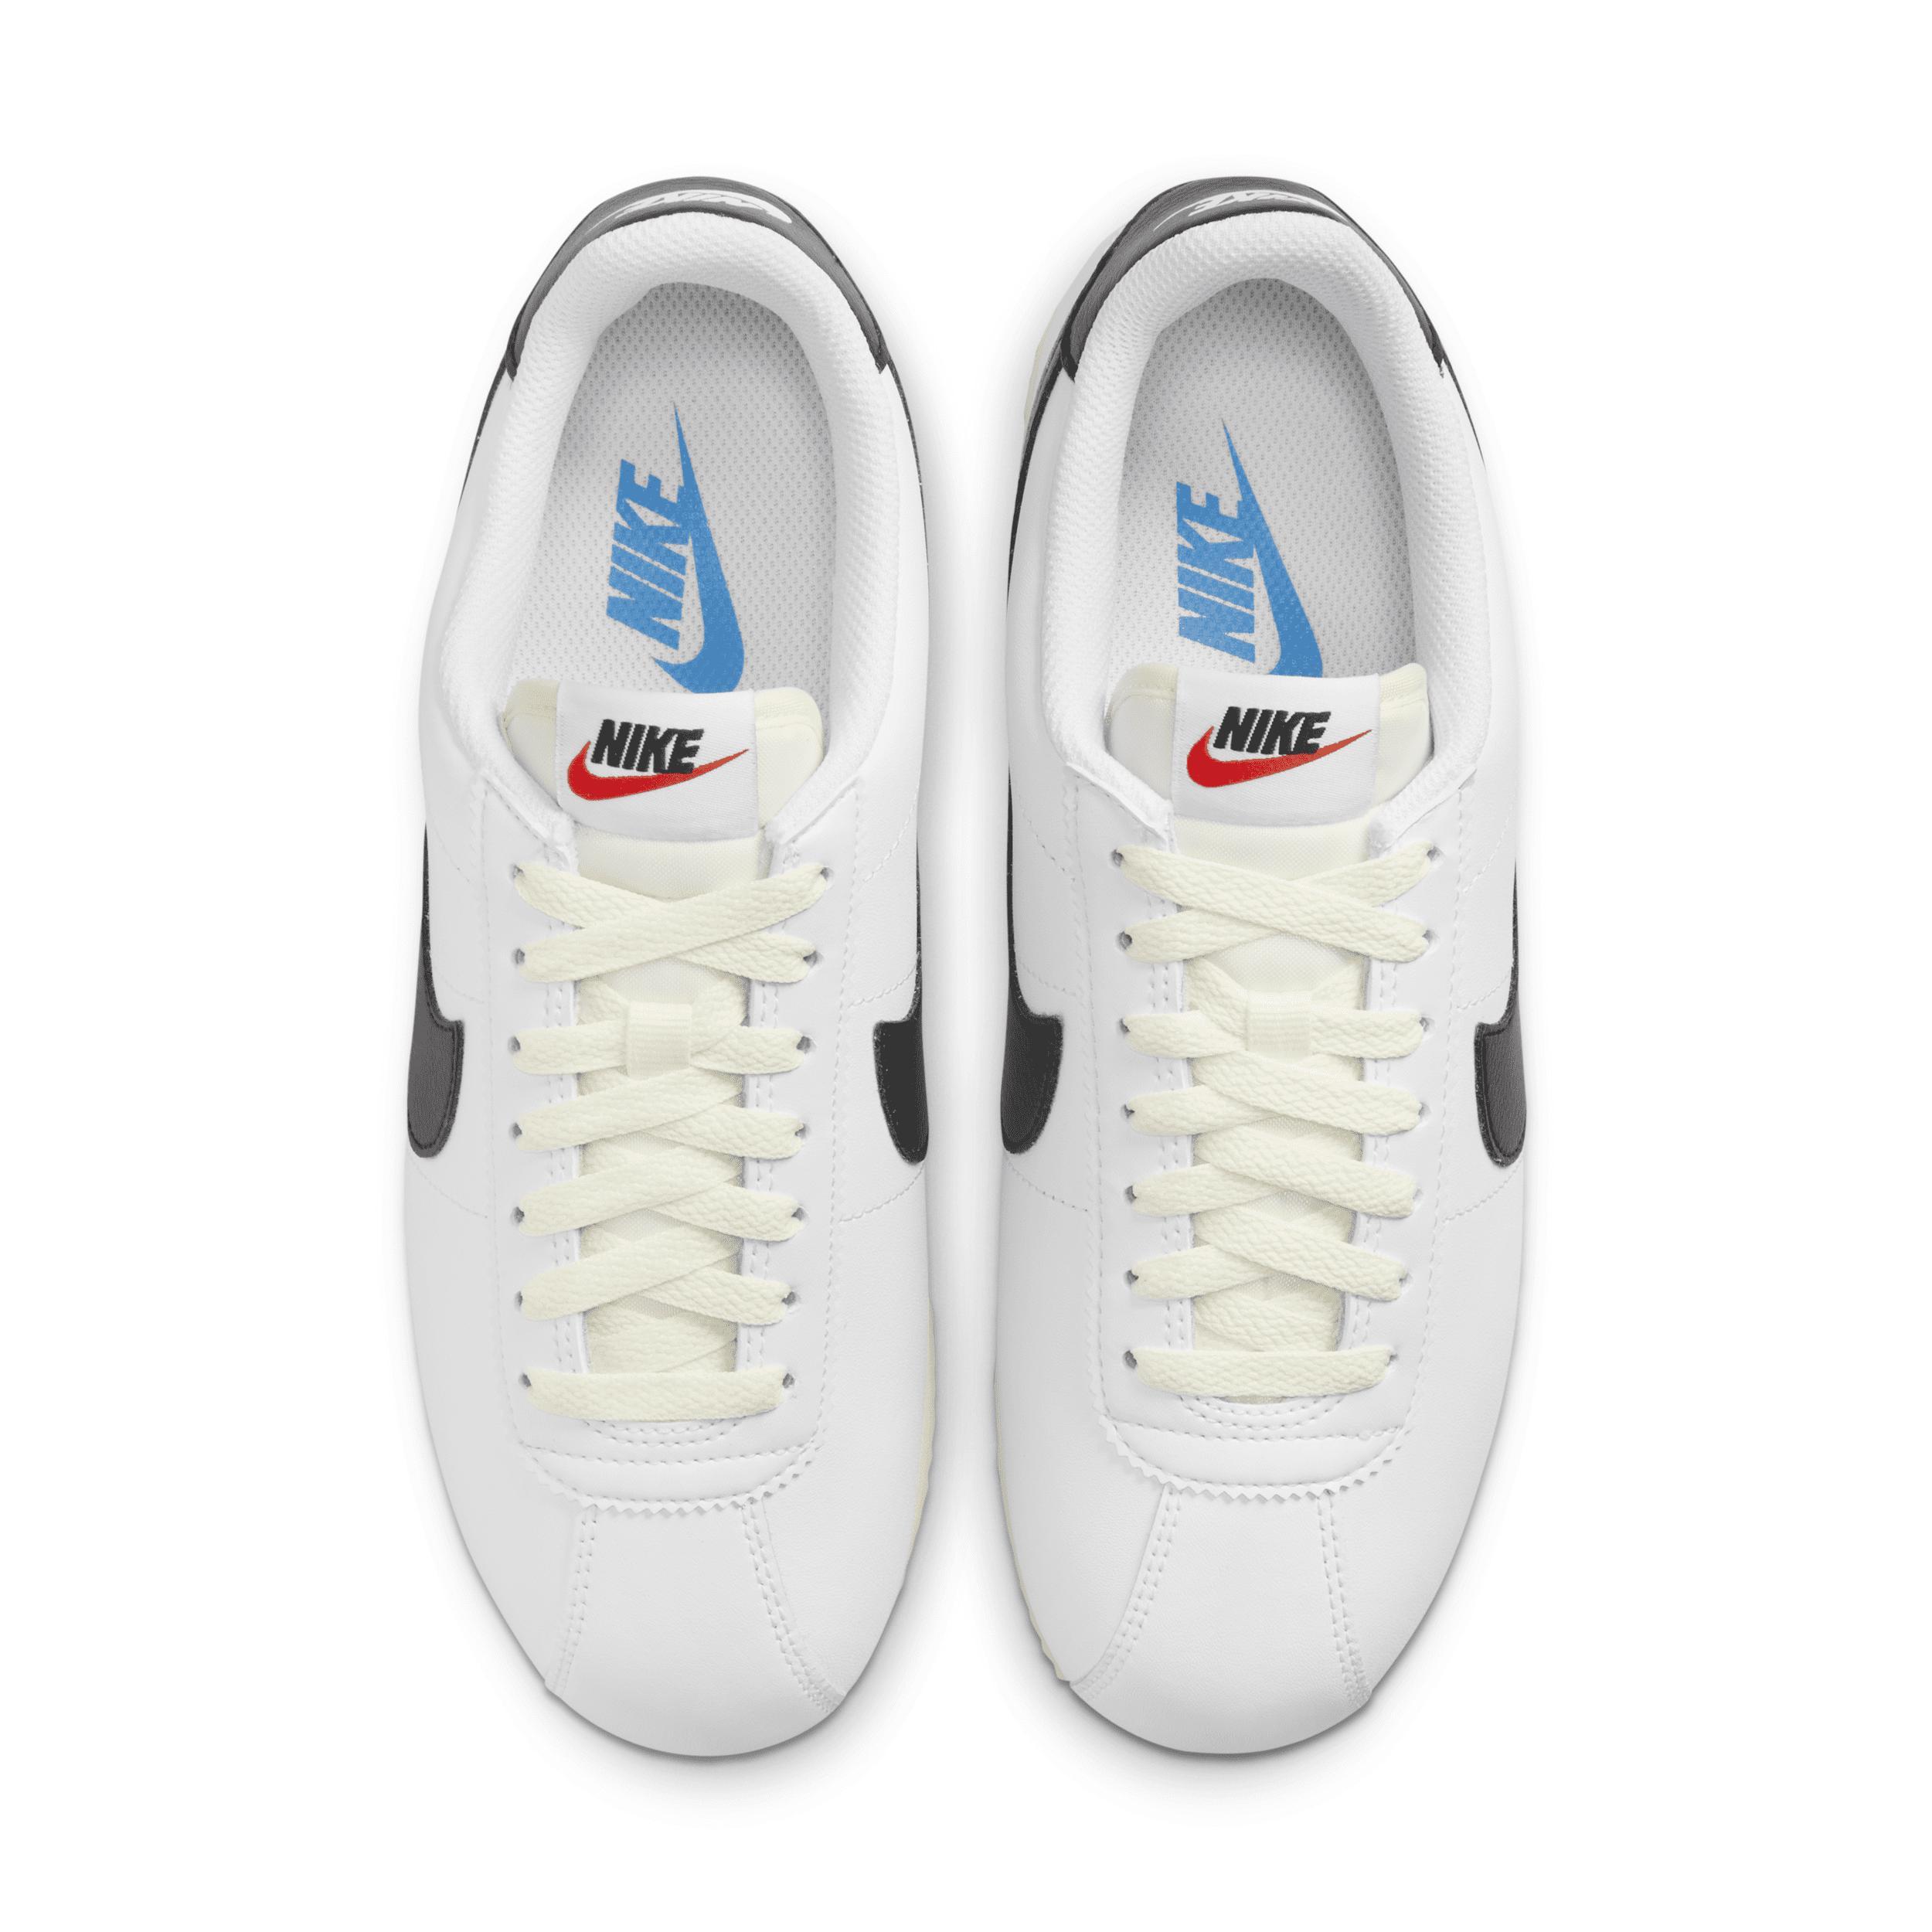 Nike Cortez Sneaker Product Image